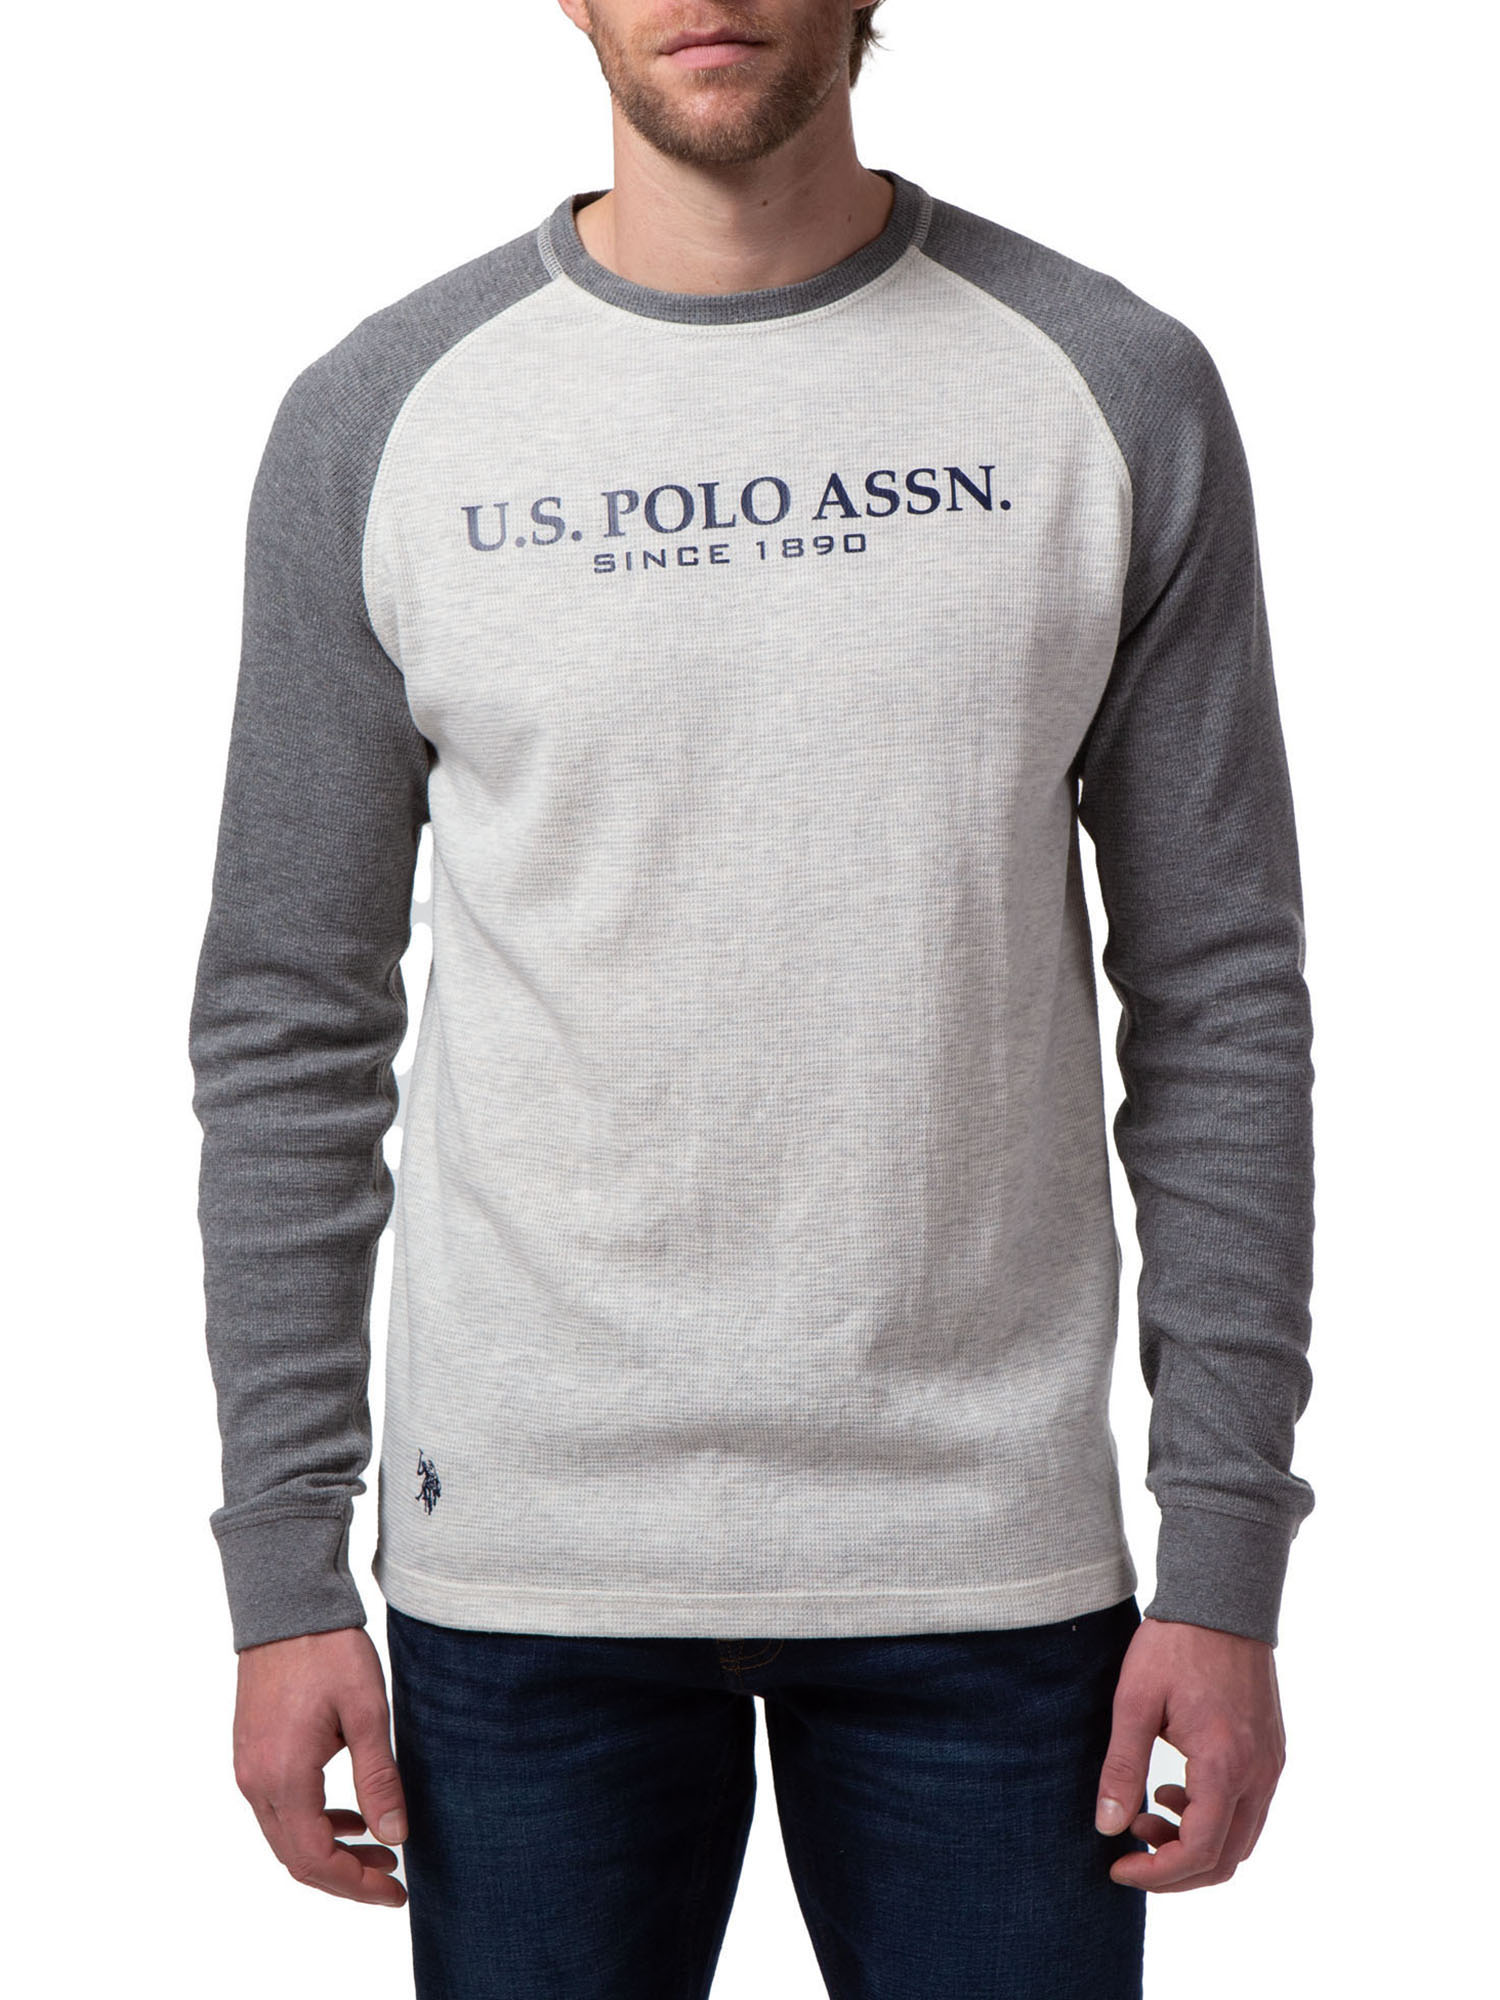 U.S. Polo Assn. Men's Chest Logo Raglan Thermal - image 1 of 4